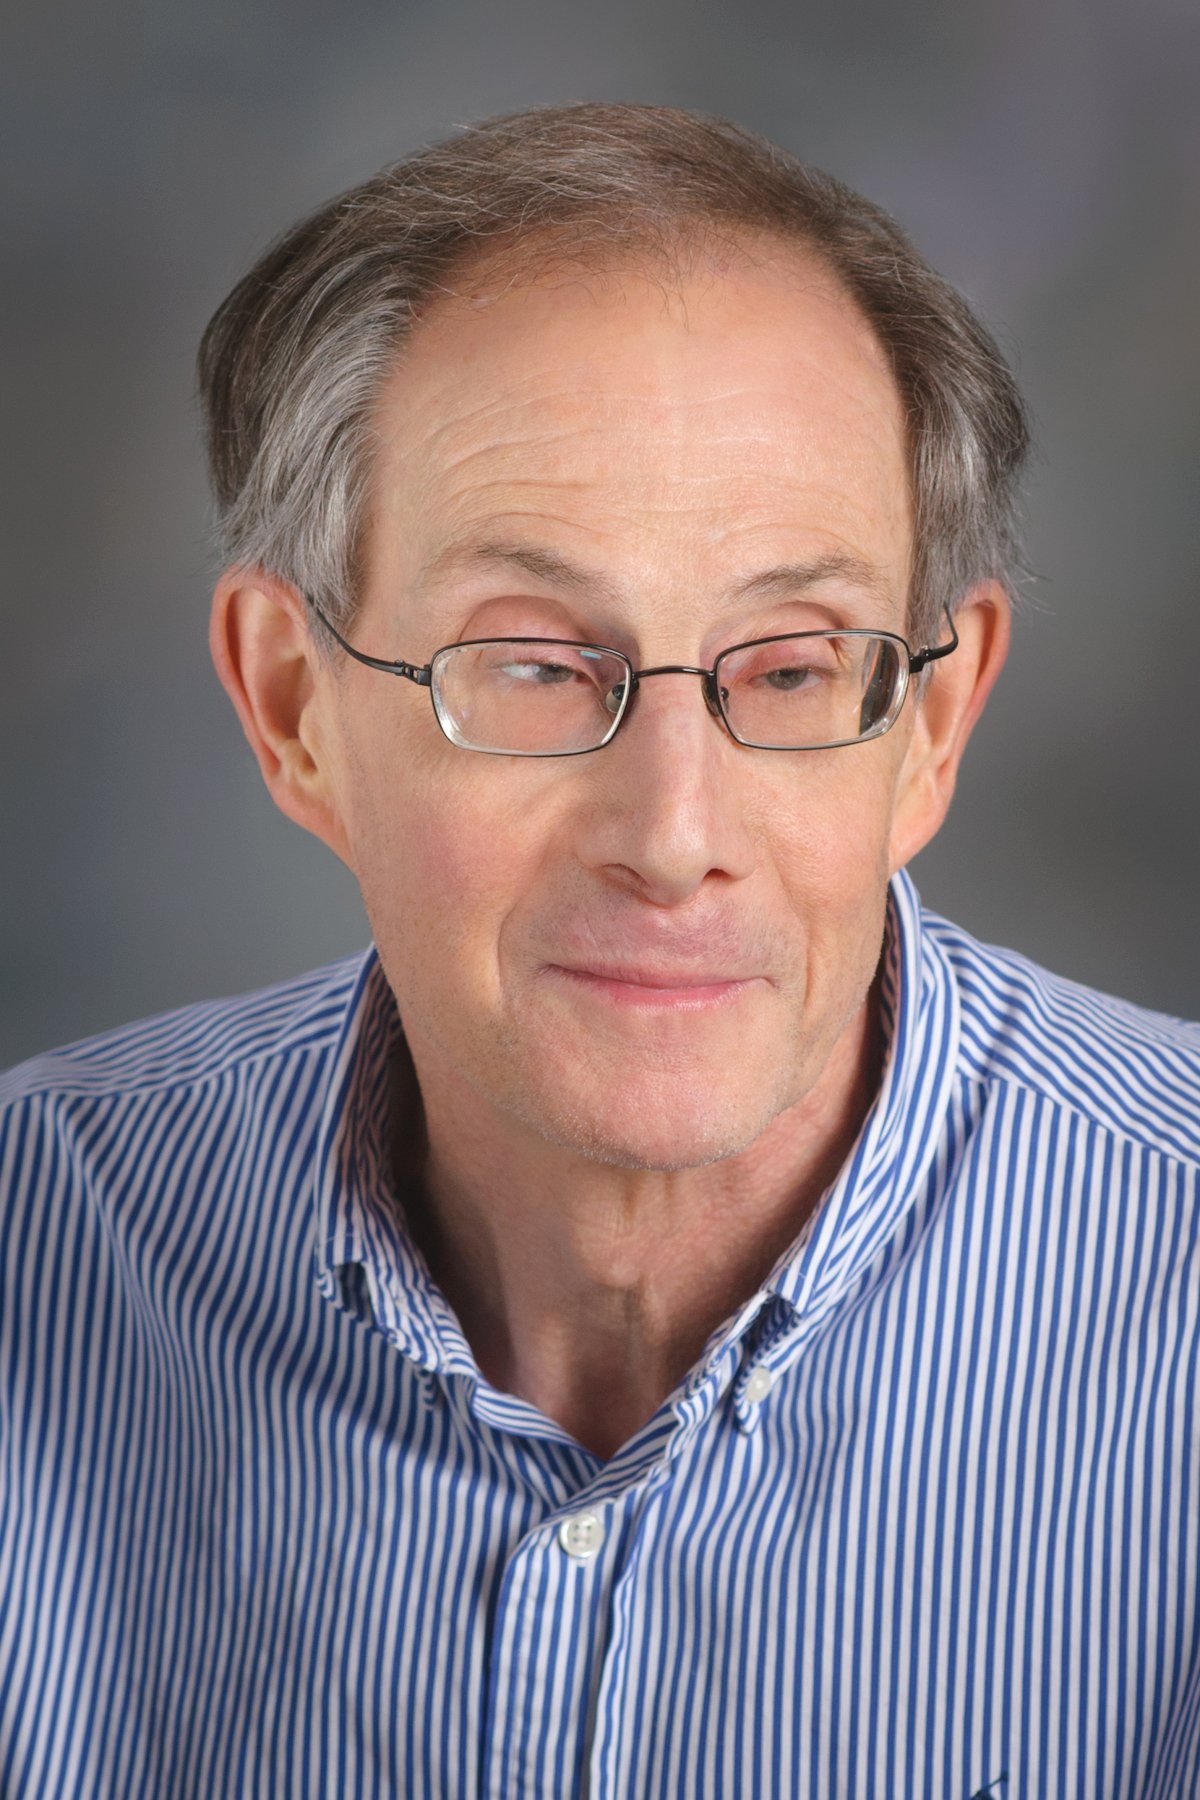 In memoriam: retired GSBS faculty member William Klein, PhD